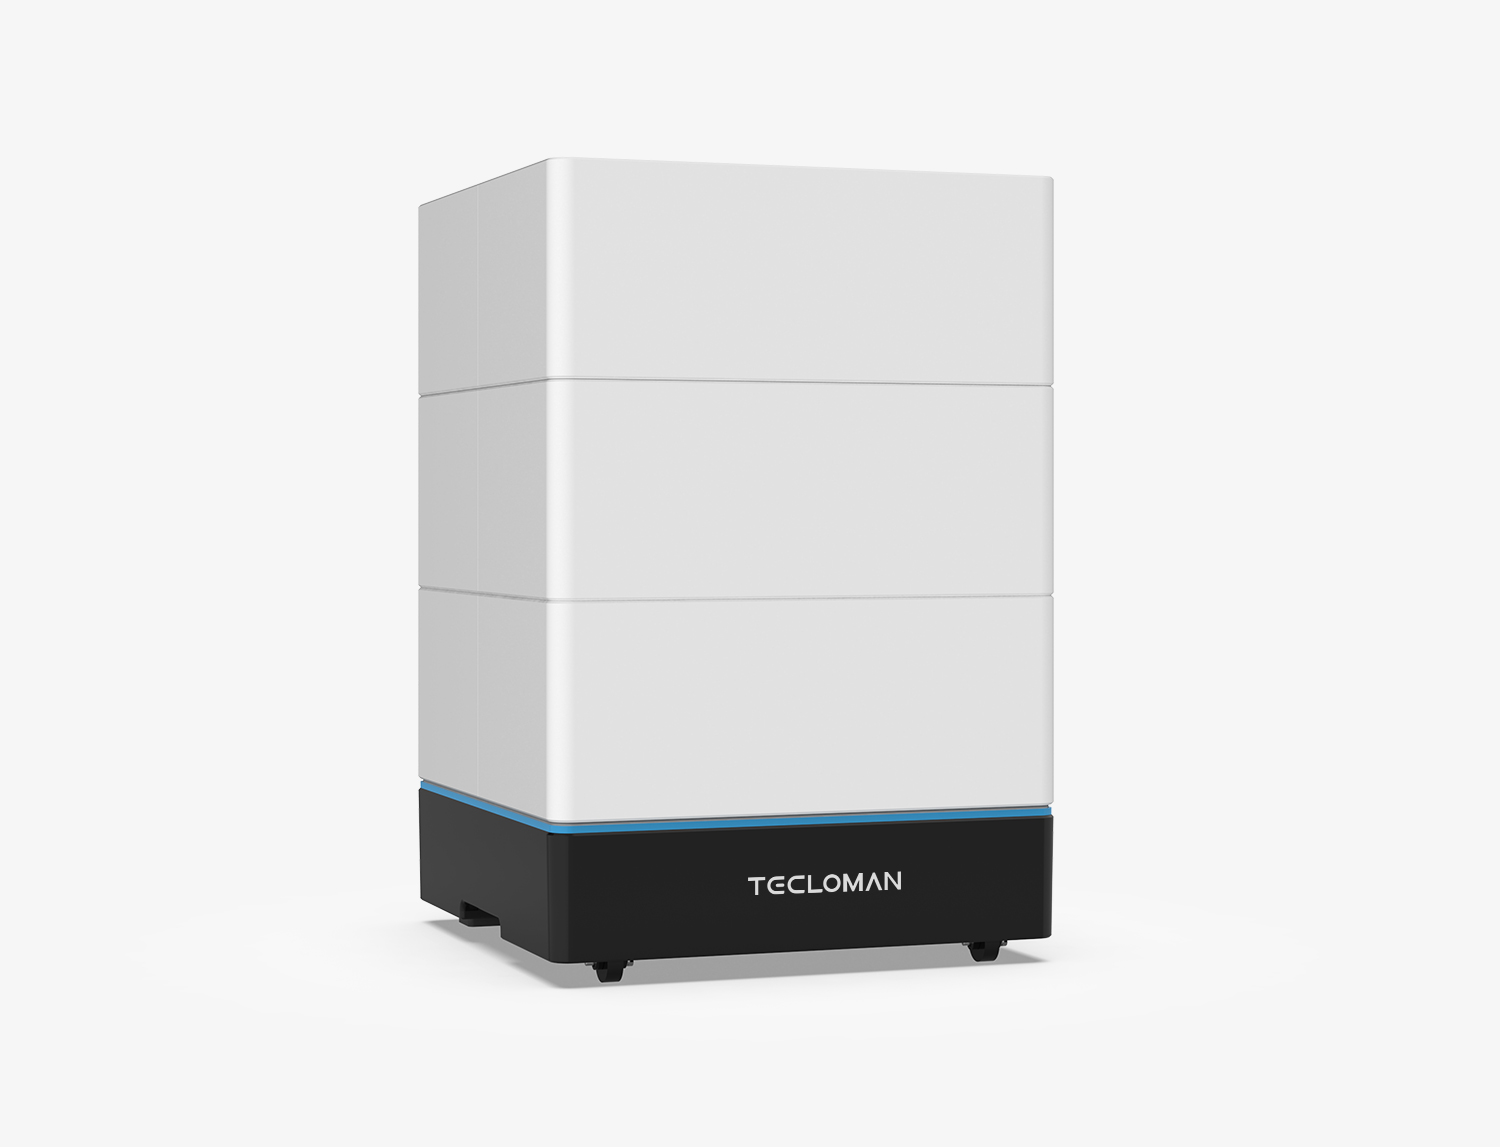 Tecloman residential storage batteries